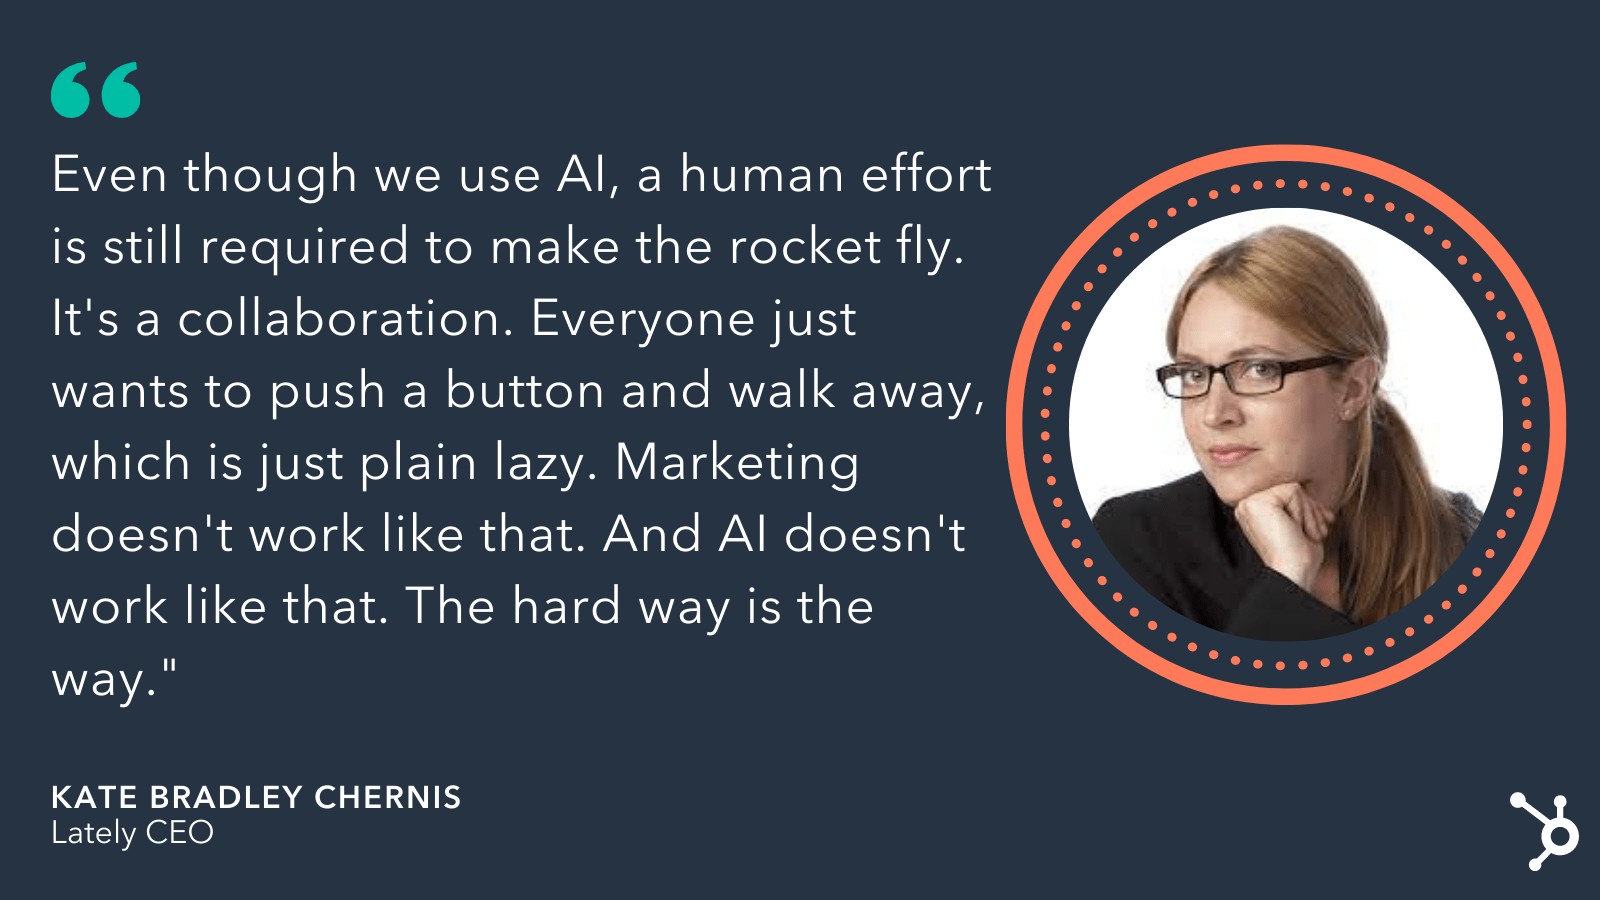 kate bradley chernis on marketing with AI